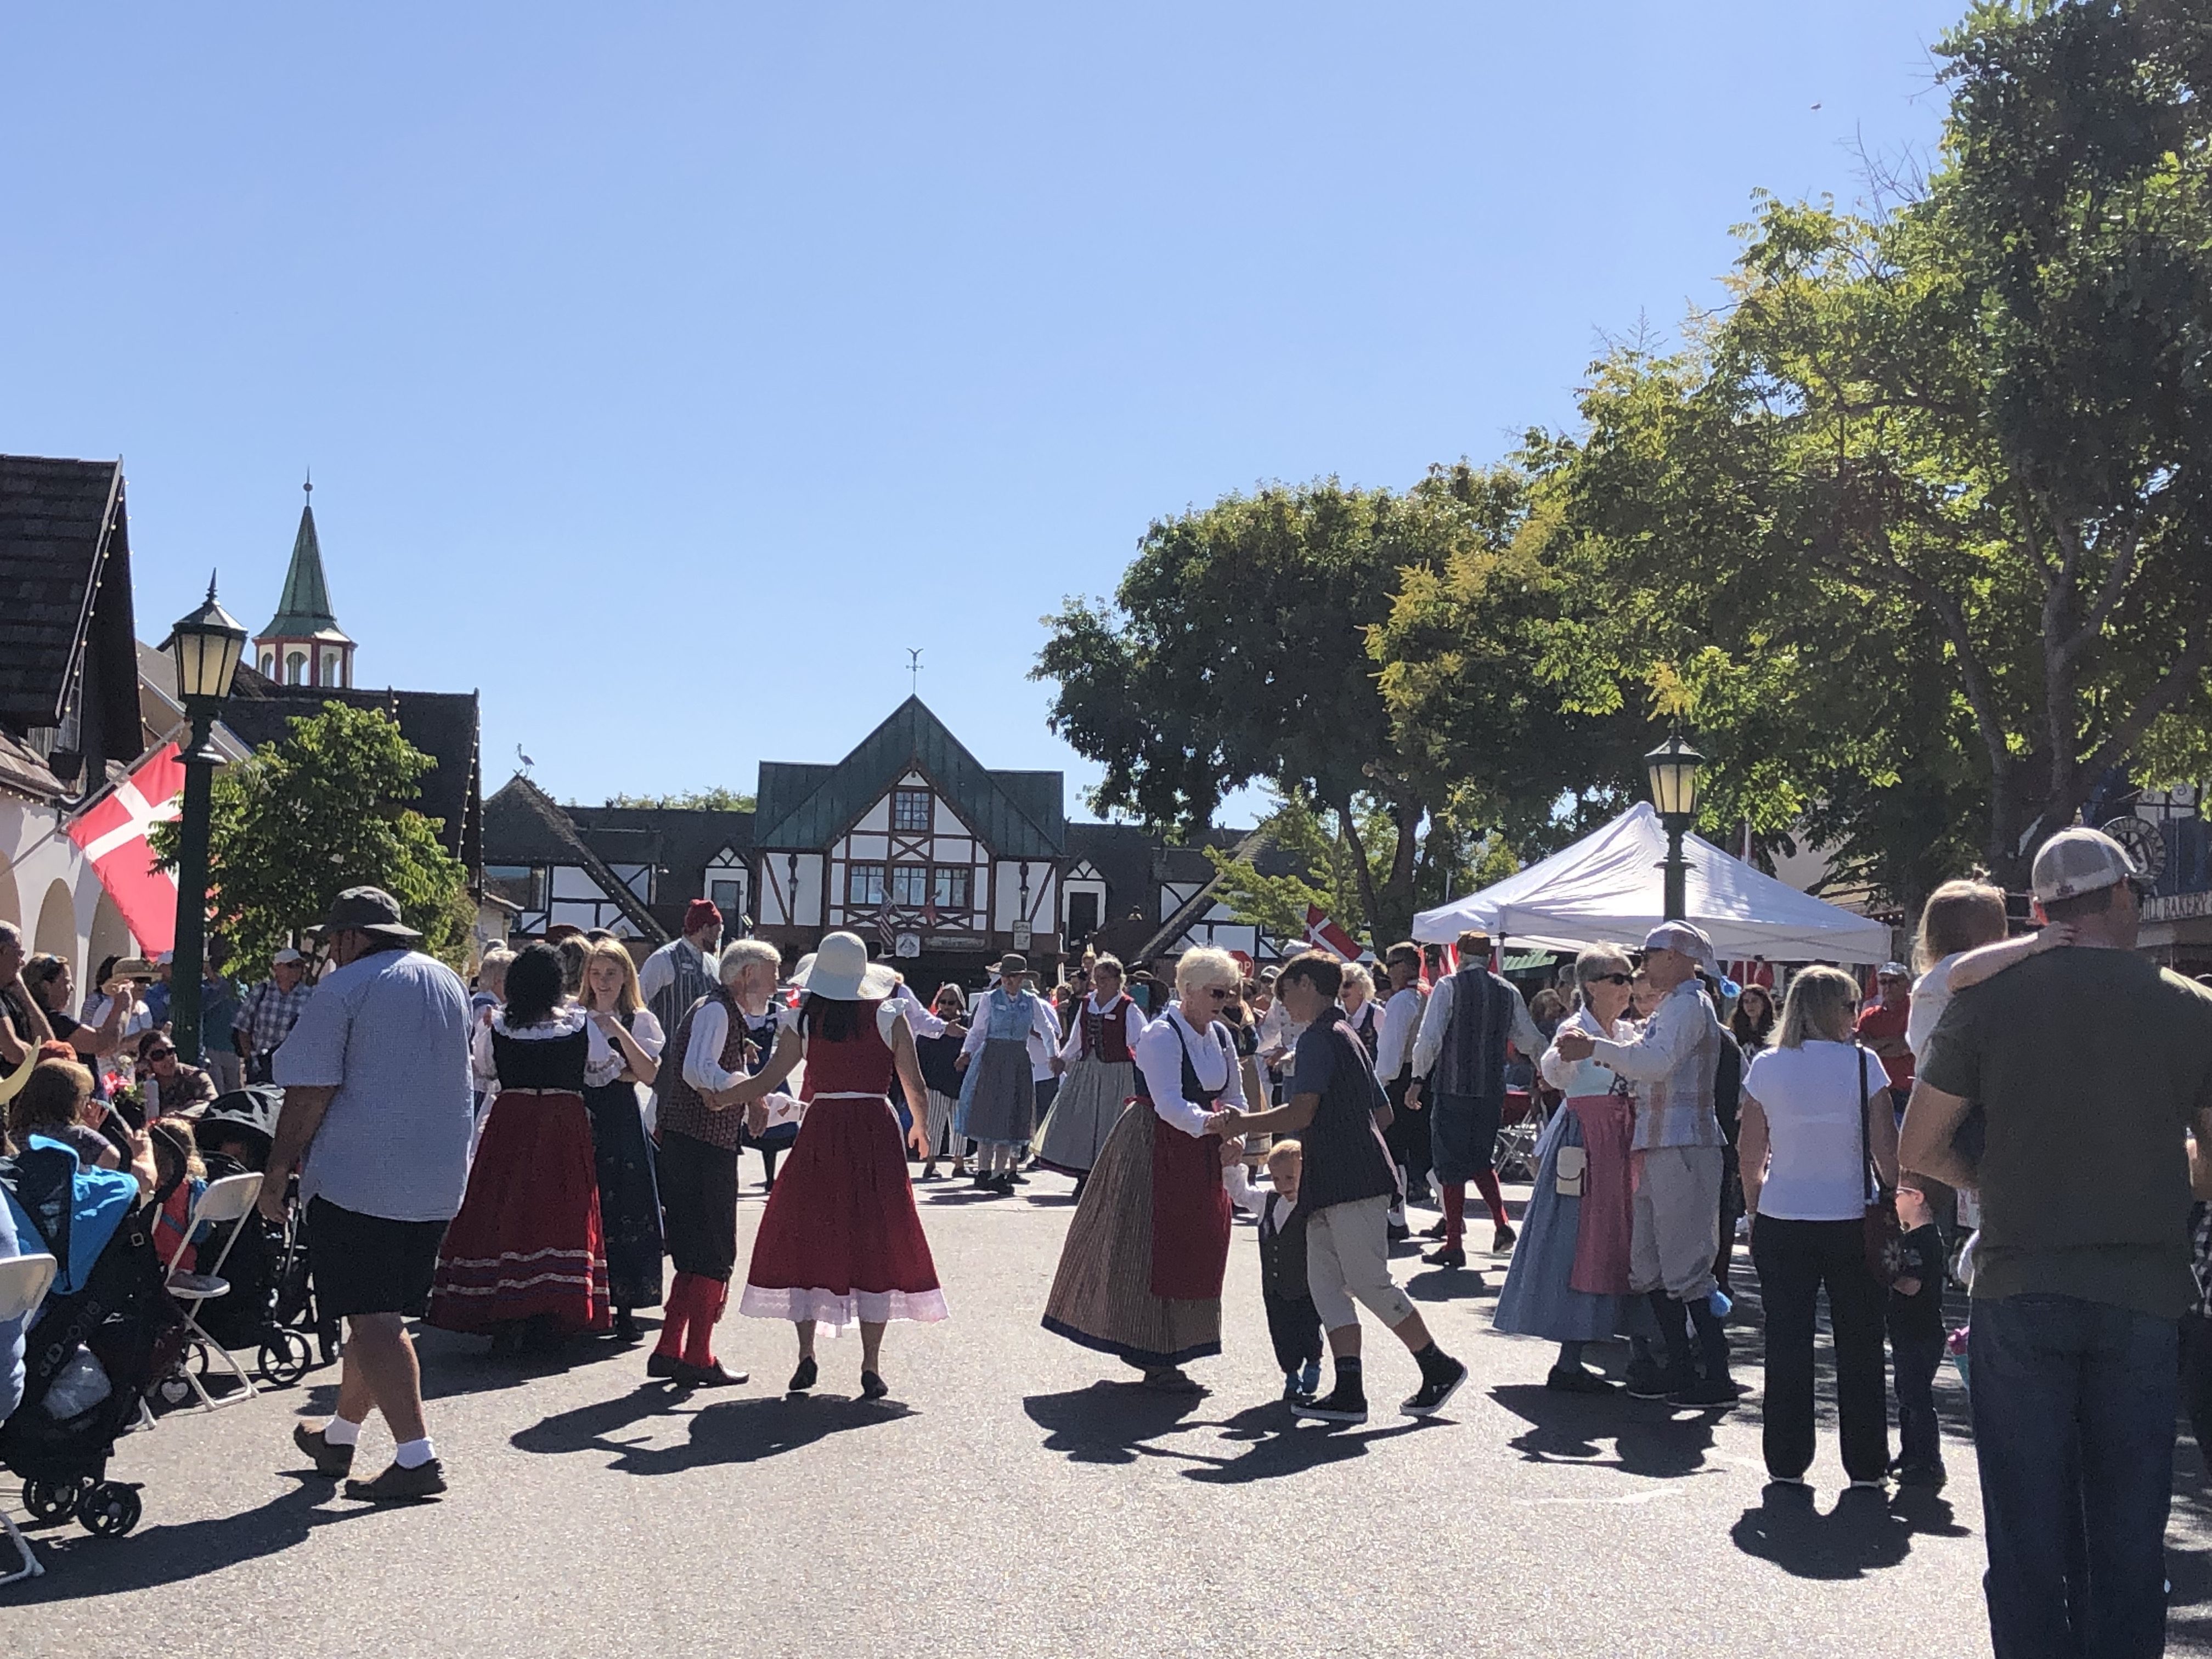 Culture, customs flourish at Danish Days celebration